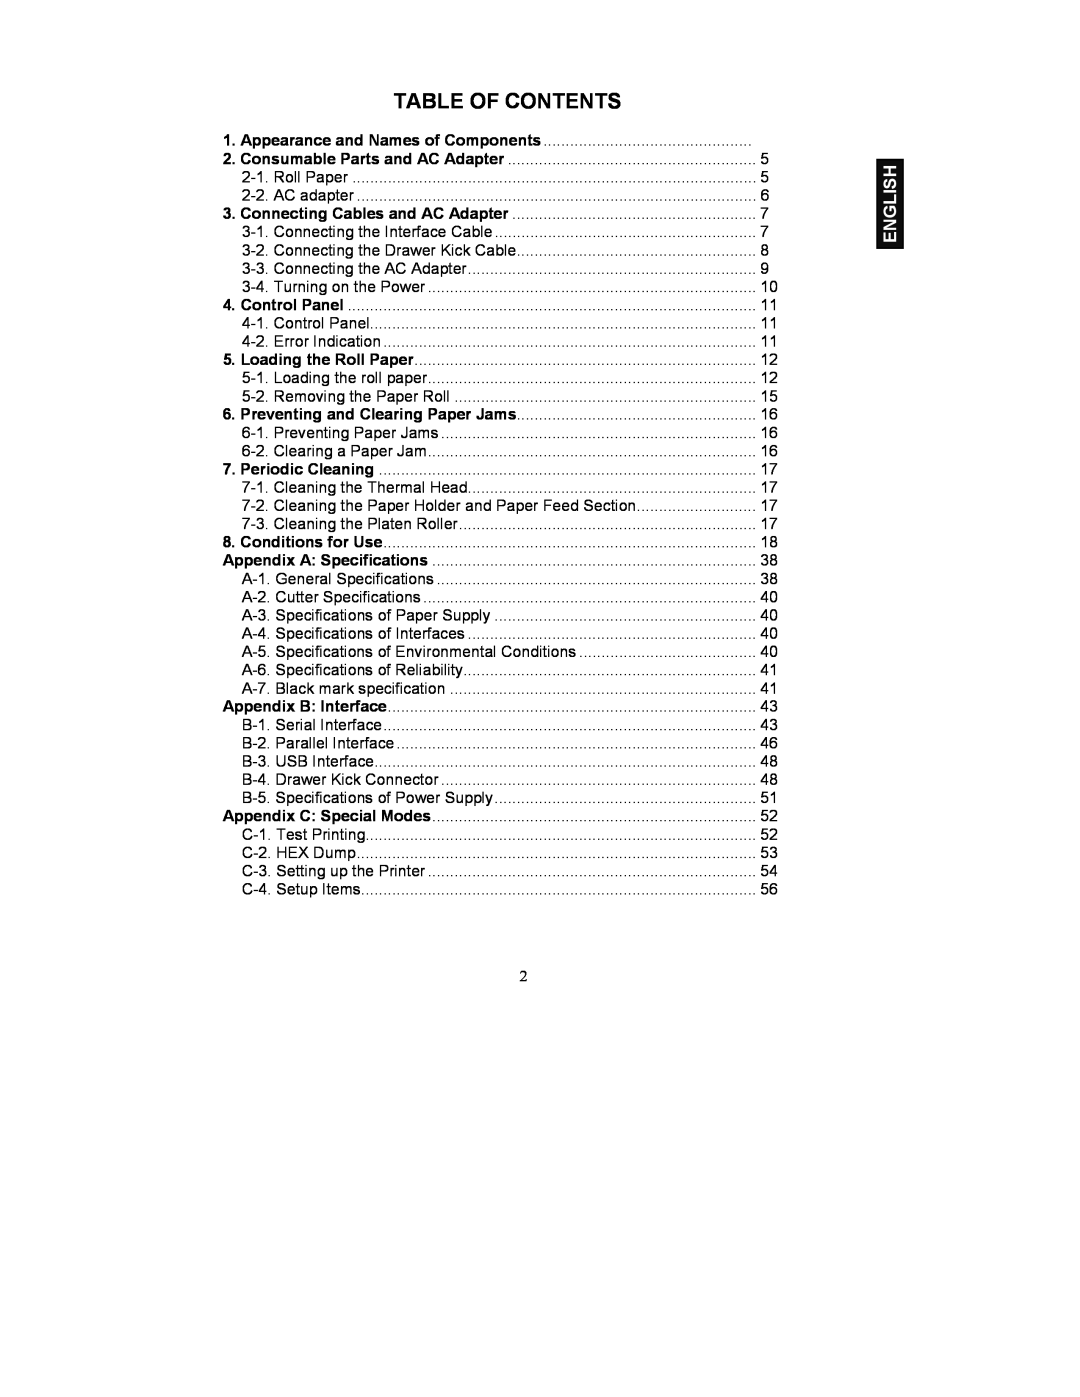 Fujitsu FP-410 user manual Table Of Contents, English 